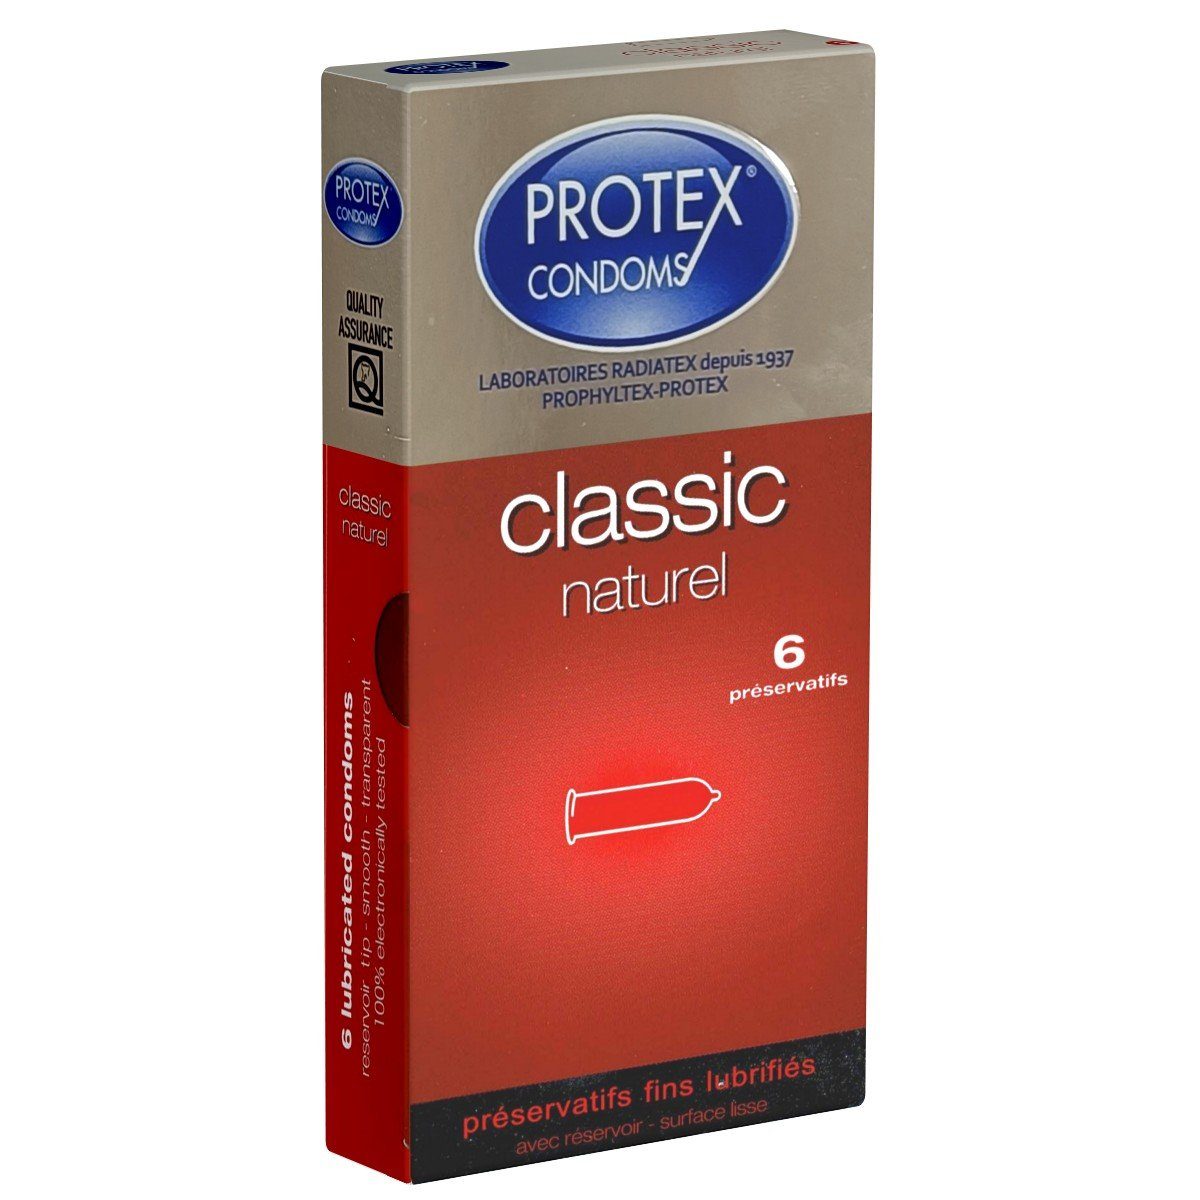 Protex Kondome CLASSIC Naturel Packung Frankreich St., Kondome 6 mit, klassische aus